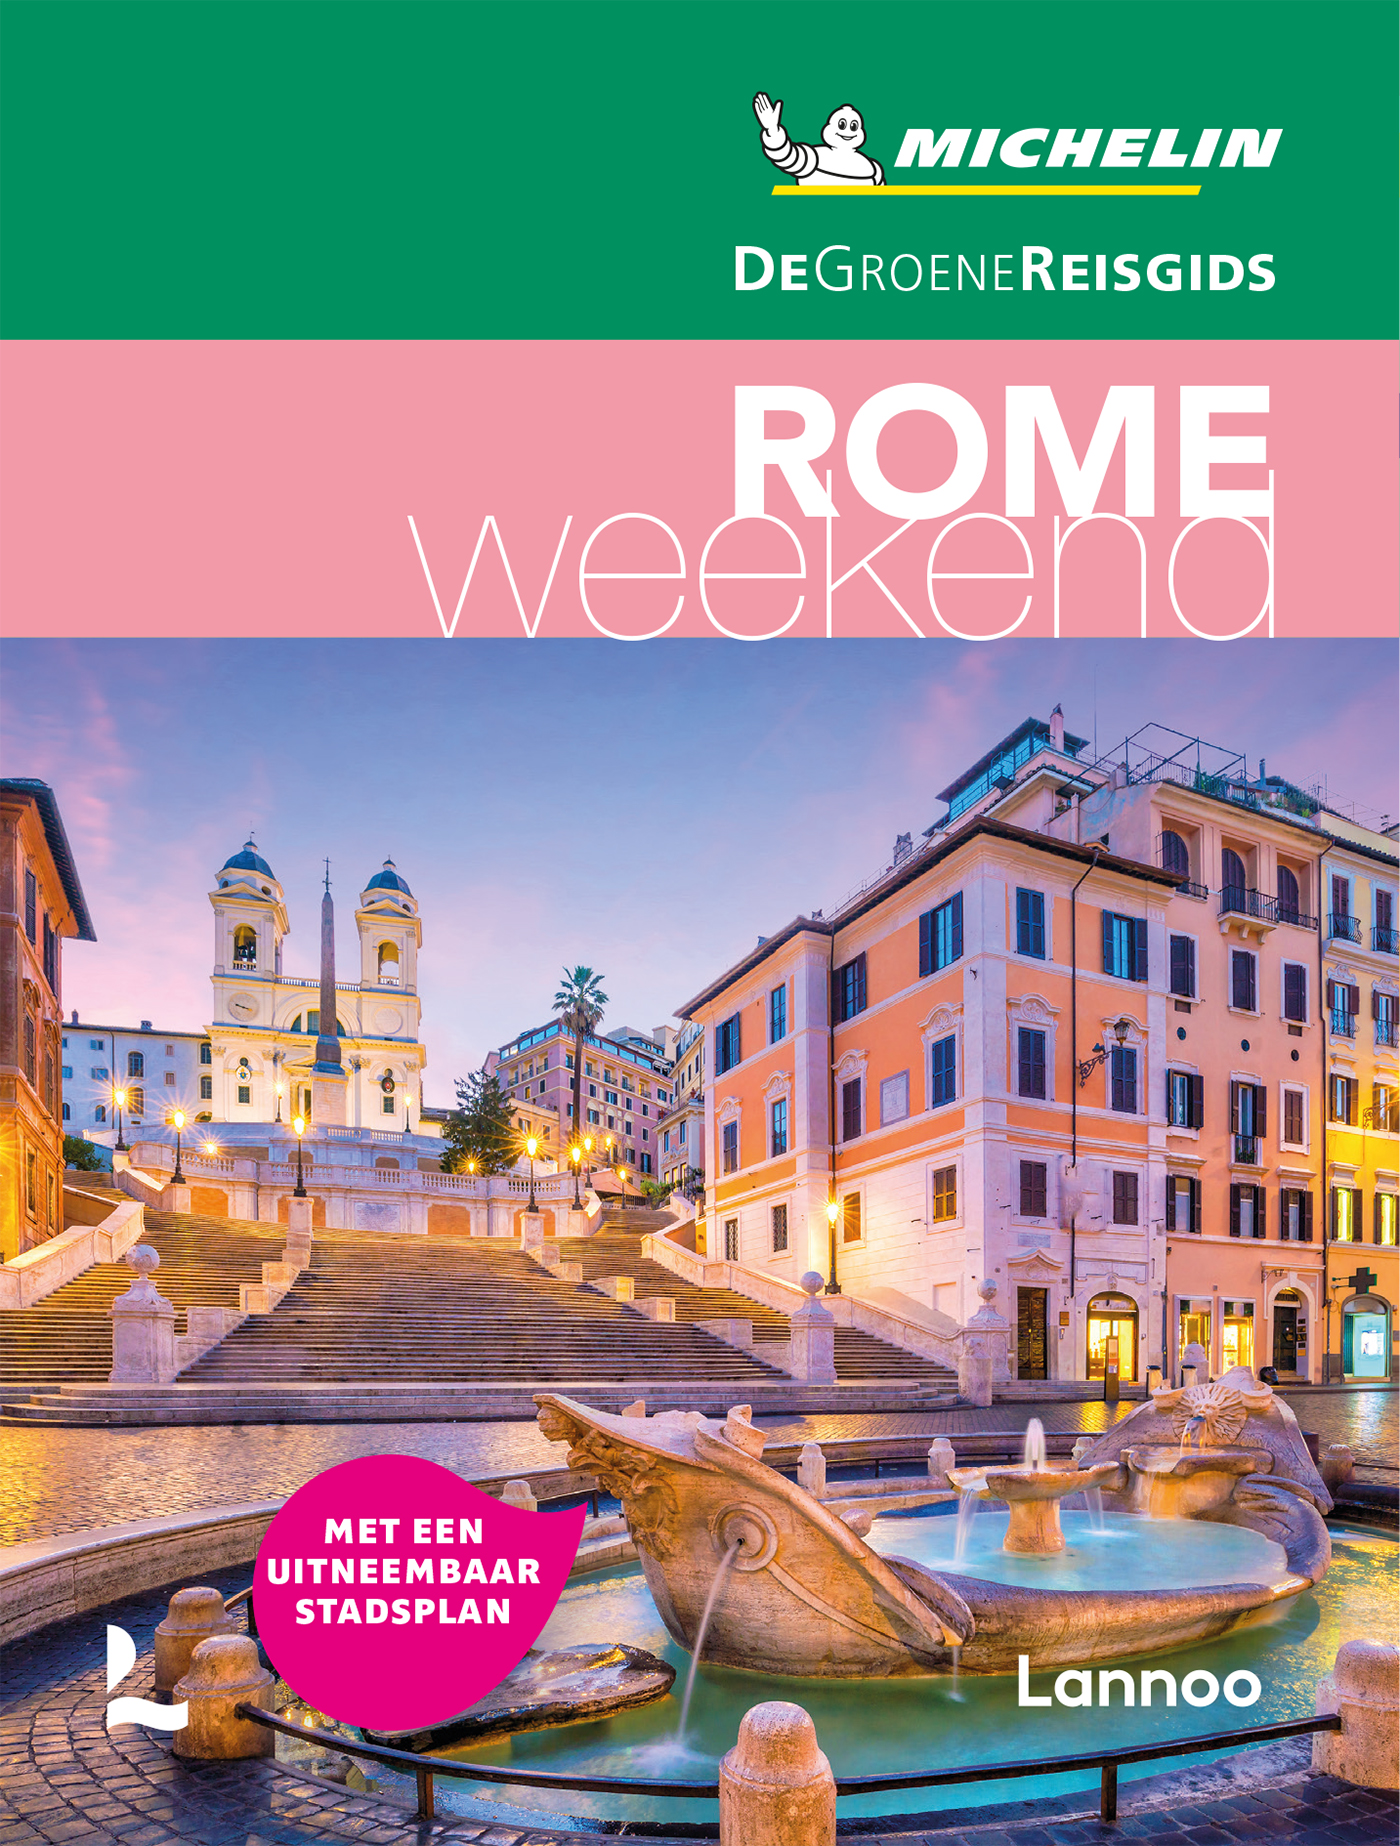 Online bestellen: Reisgids Michelin groene gids weekend Rome | Lannoo